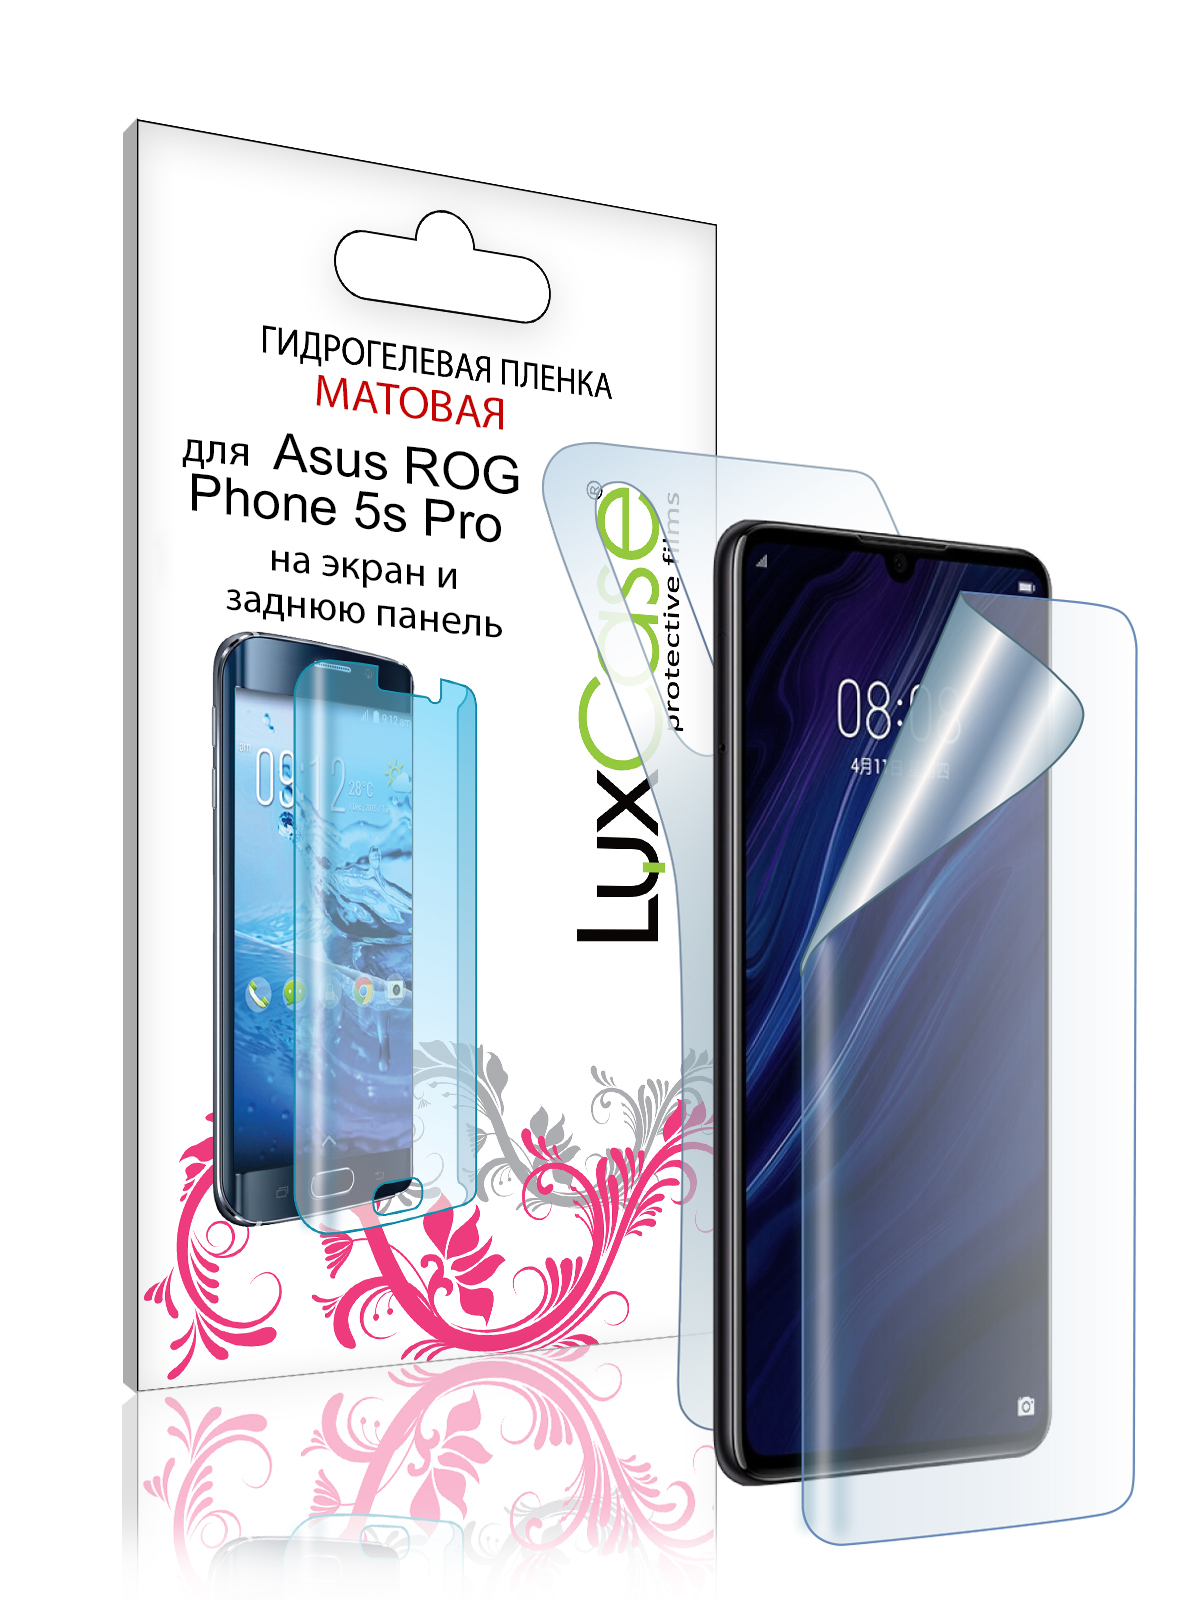 Гидрогелевая пленка LuxCase для ASUS ROG Phone 5s Pro 0.14mm Front and Back Matte 90037 гидрогелевая пленка для apple iphone 4s айфон 4s на заднюю крышку с вырезом под камеру защитная противоударная пленка